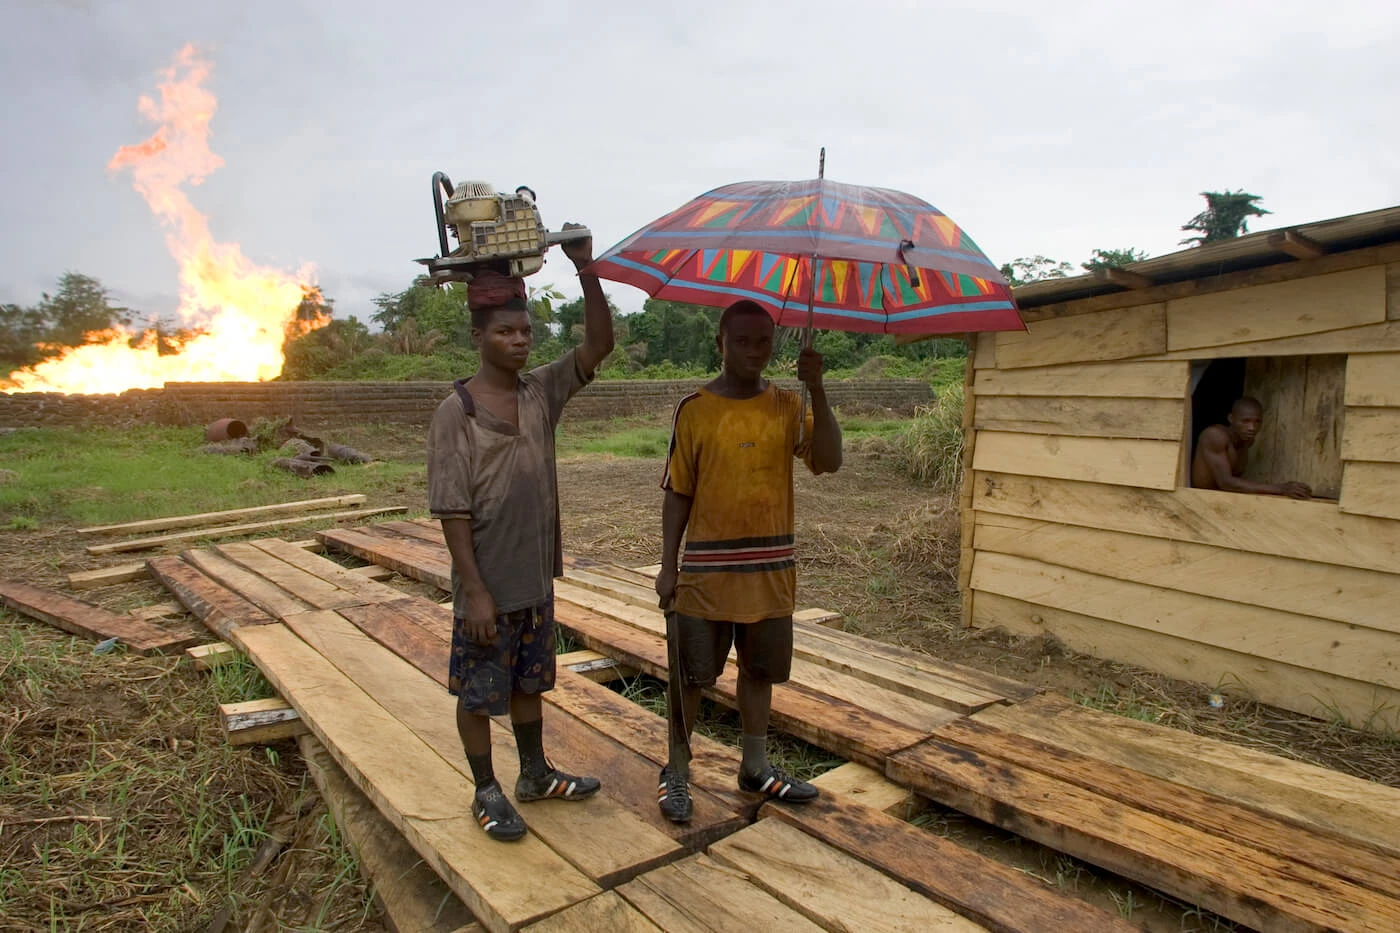 Behind three Nigerian men, a gas flaring furnace amid green fields is seen